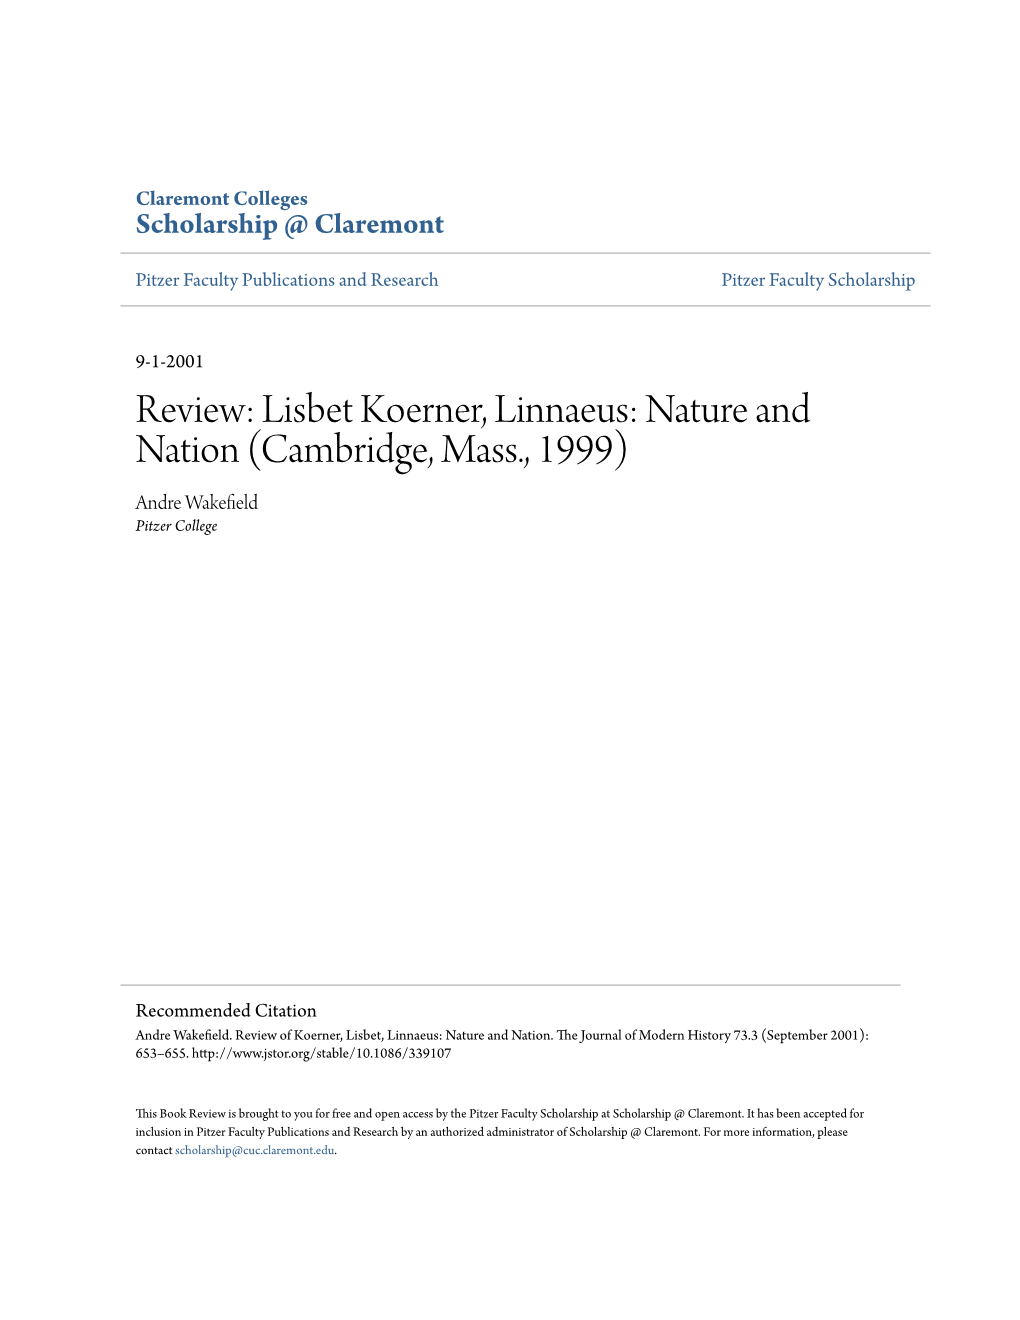 Lisbet Koerner, Linnaeus: Nature and Nation (Cambridge, Mass., 1999) Andre Wakefield Pitzer College